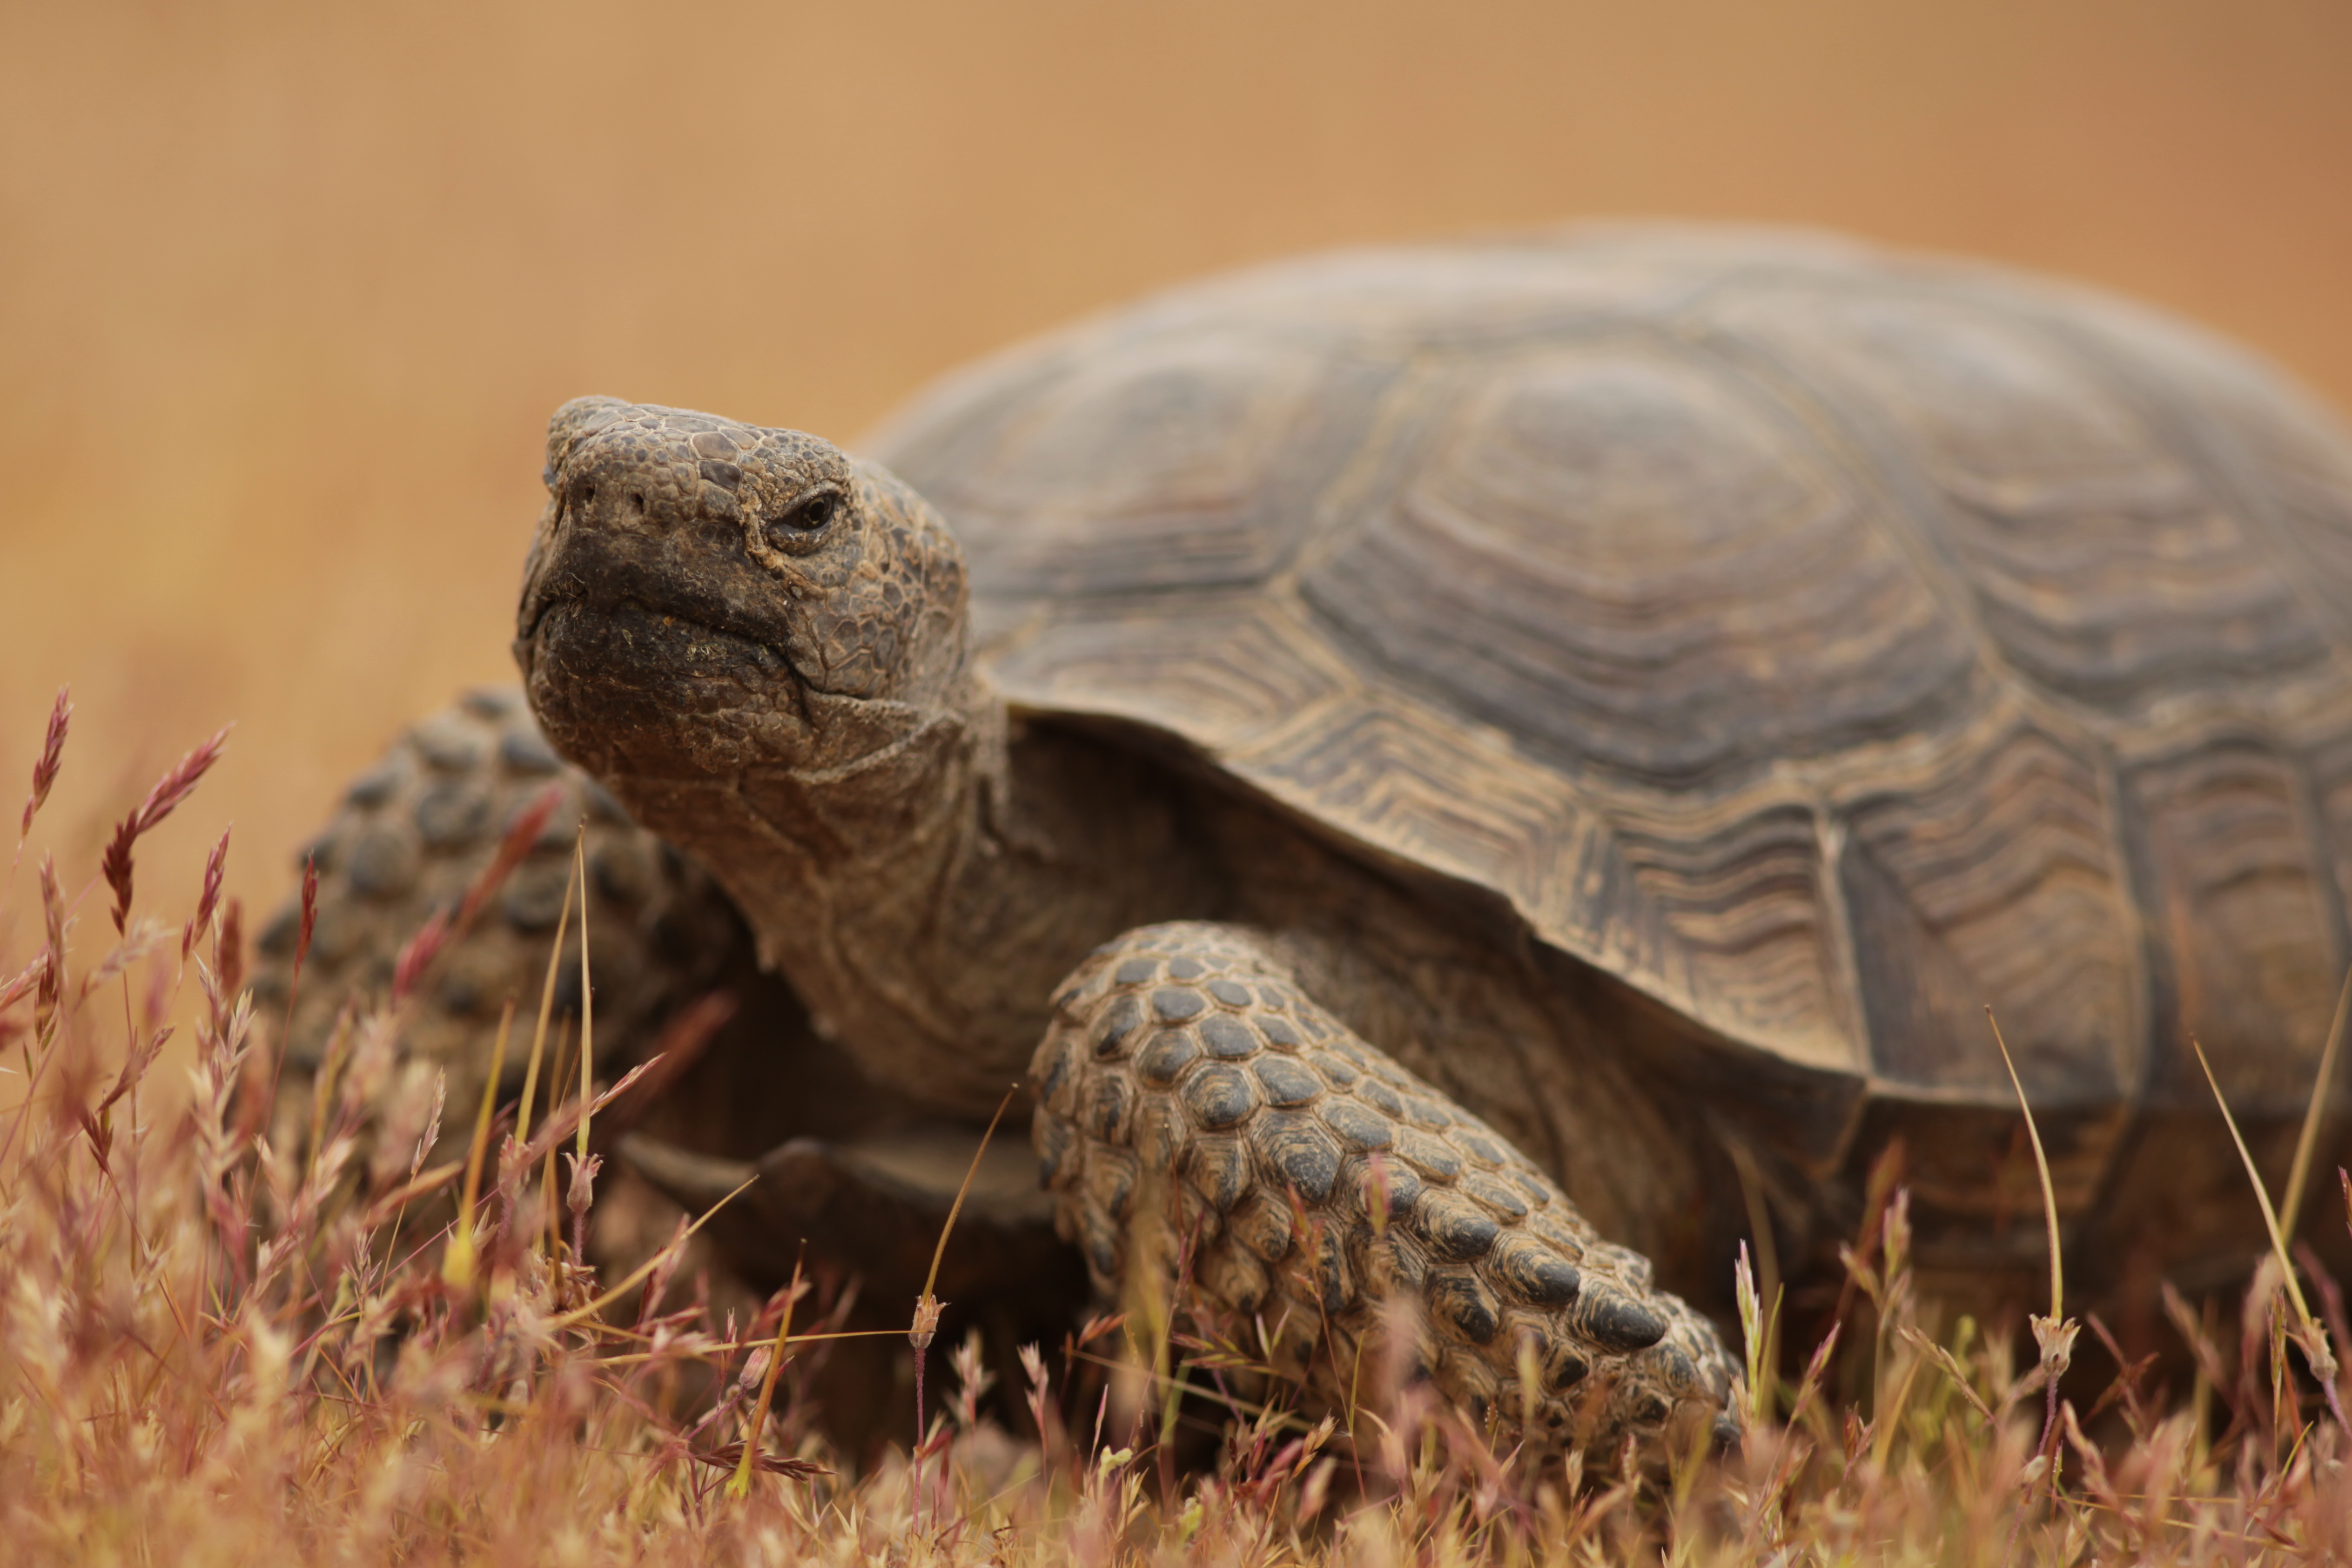 Adopt a Desert Tortoise - Wildlife Adoption and Gift Center